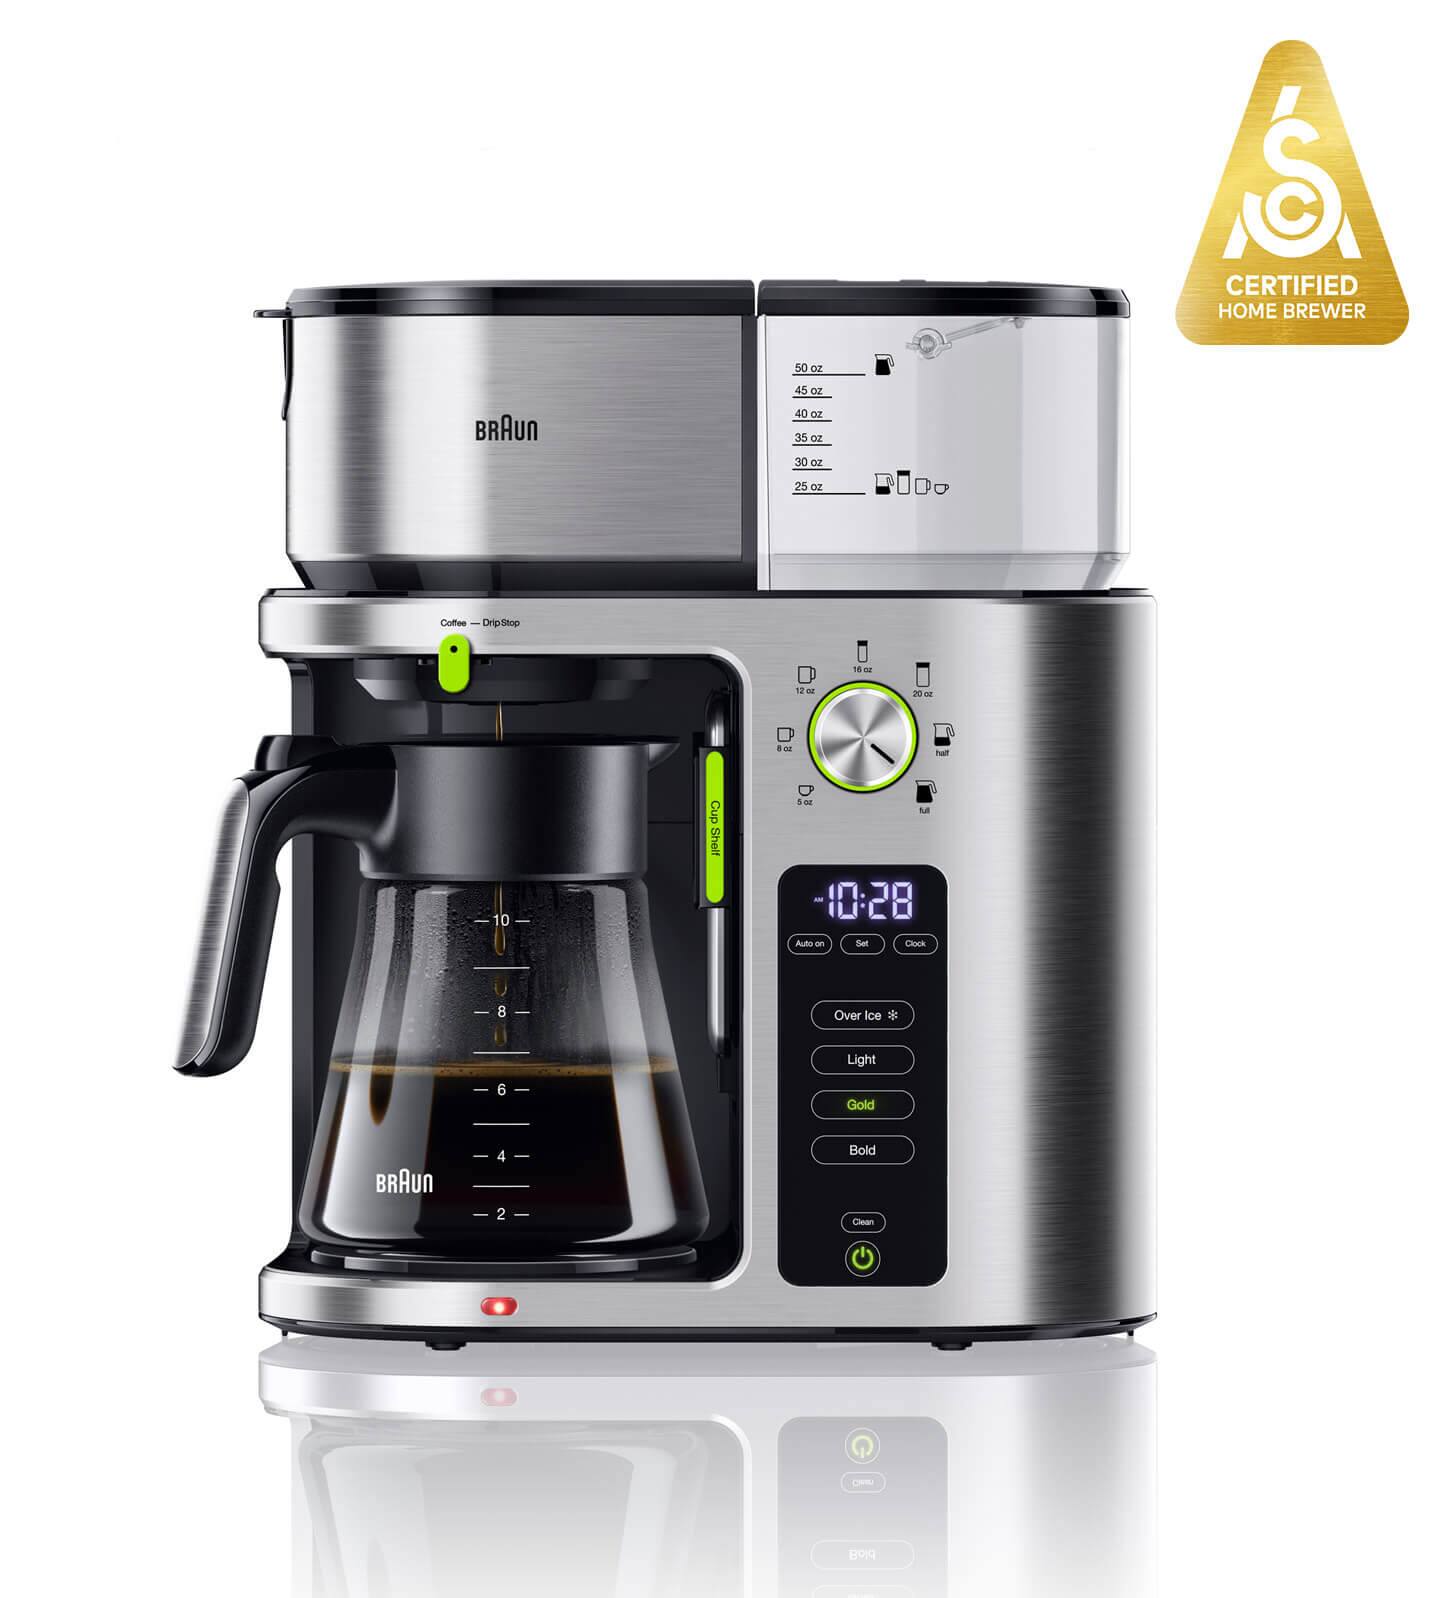 Braun MultiServe Coffee machine with SCA certification